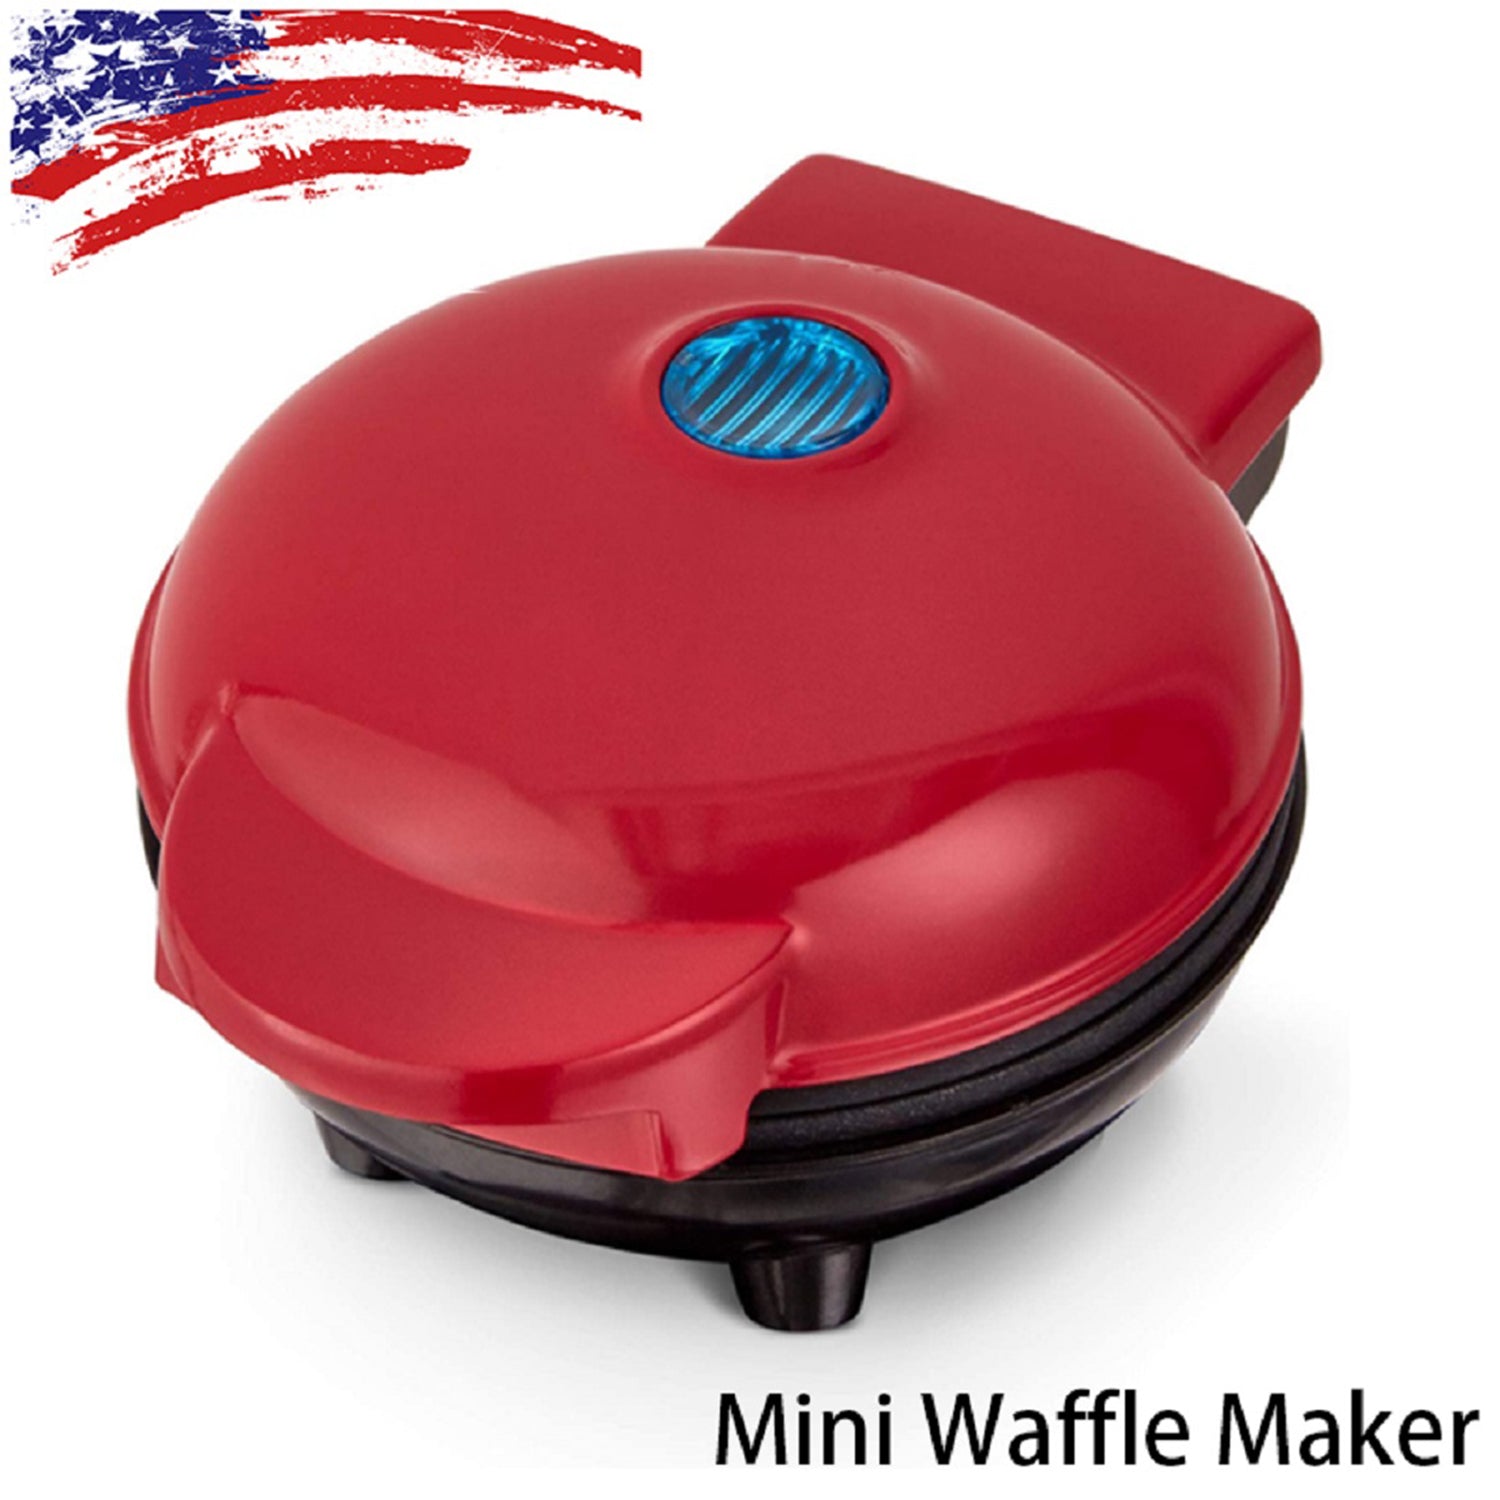 SUGIFT 4 inch Mini Waffle Maker Non-Stick Waffle Maker Red